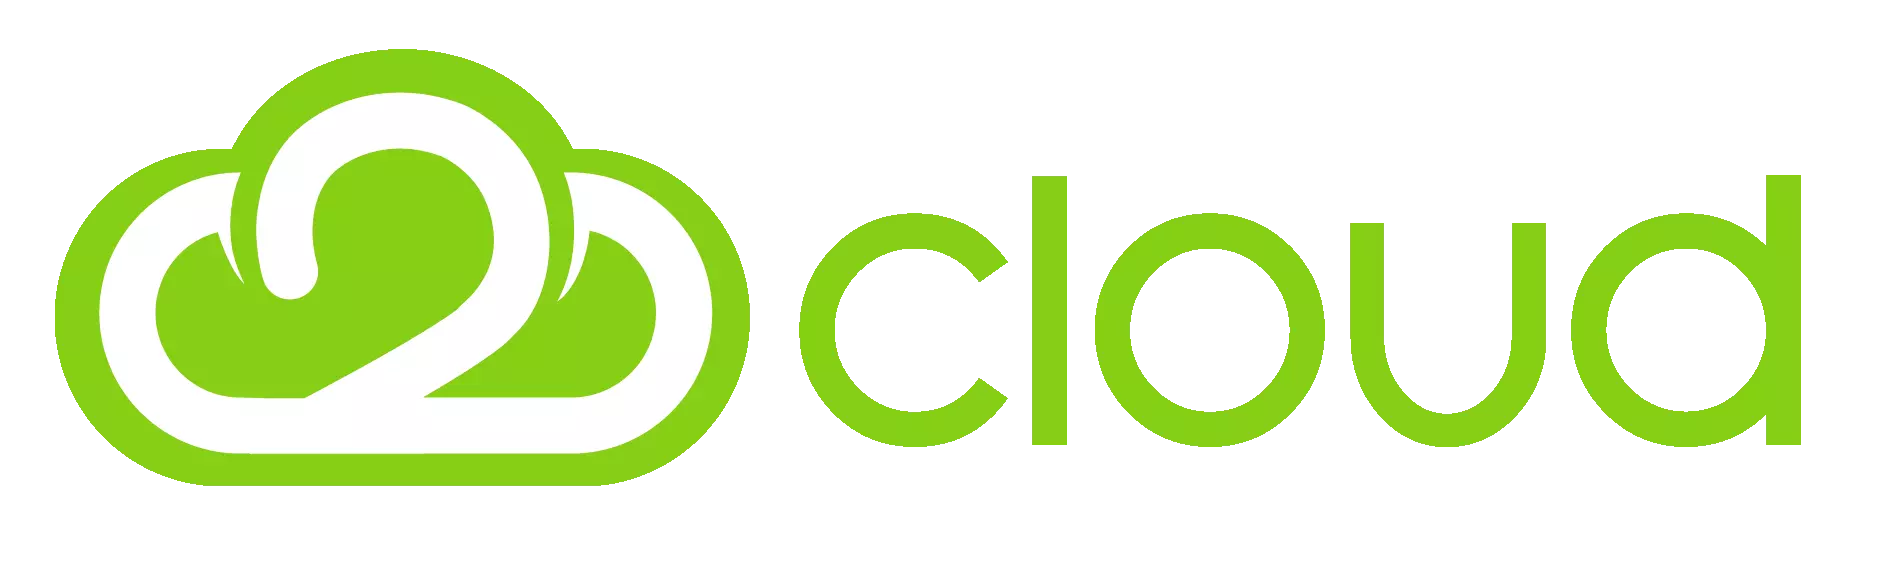 2cloud logo